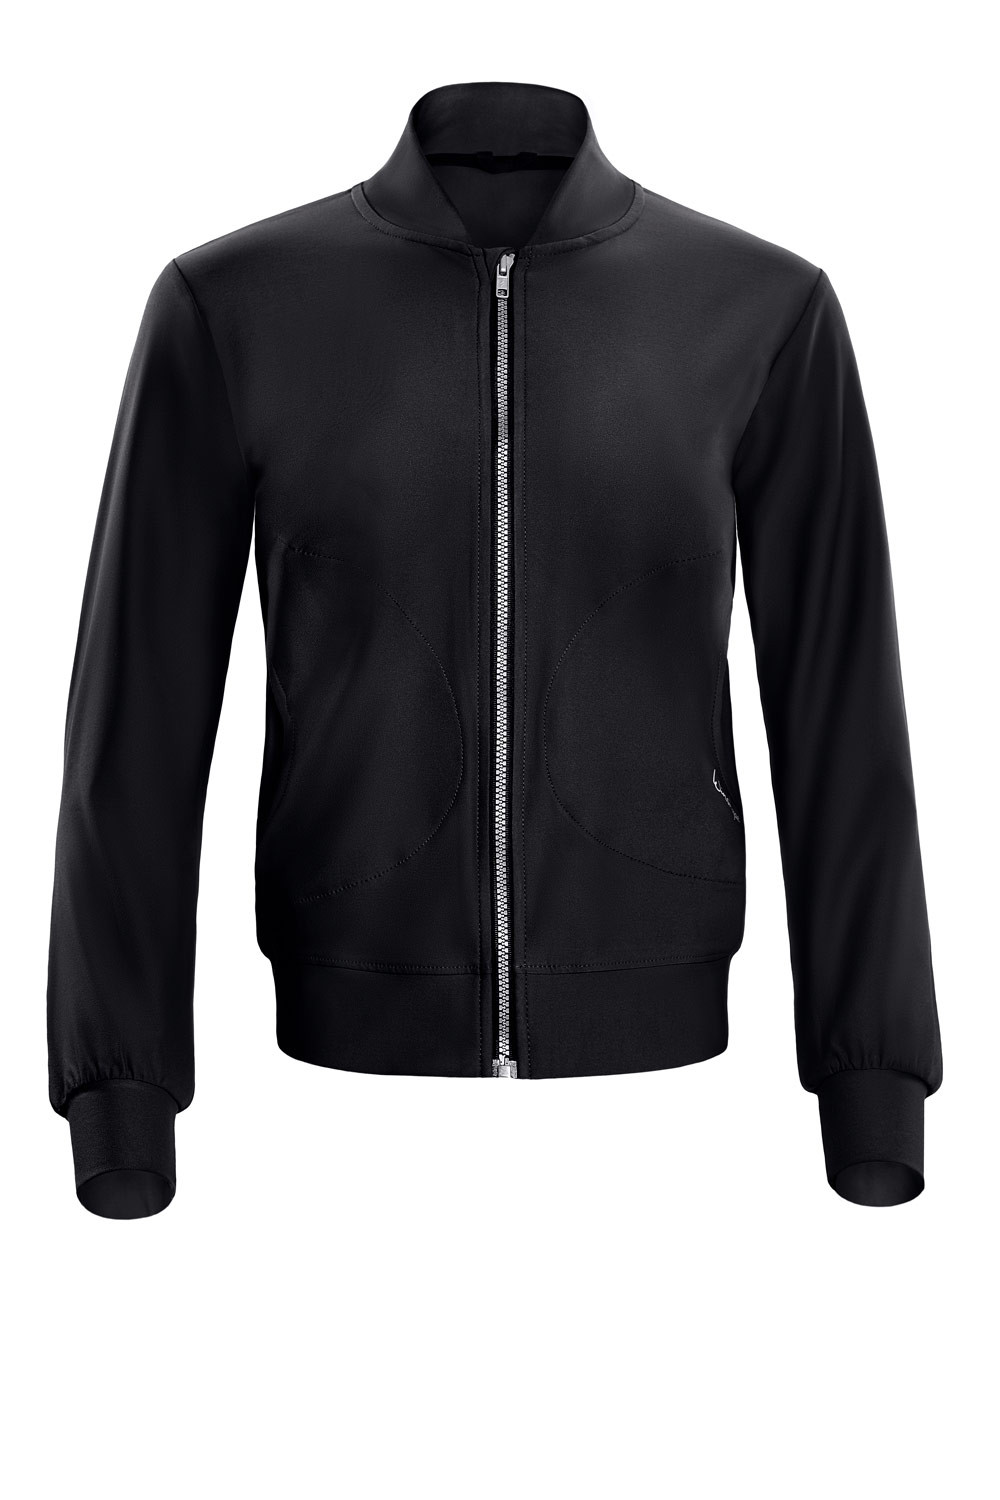 Style Winshape Jacket Soft Bomber J007C, Functional Ultra schwarz, Comfort